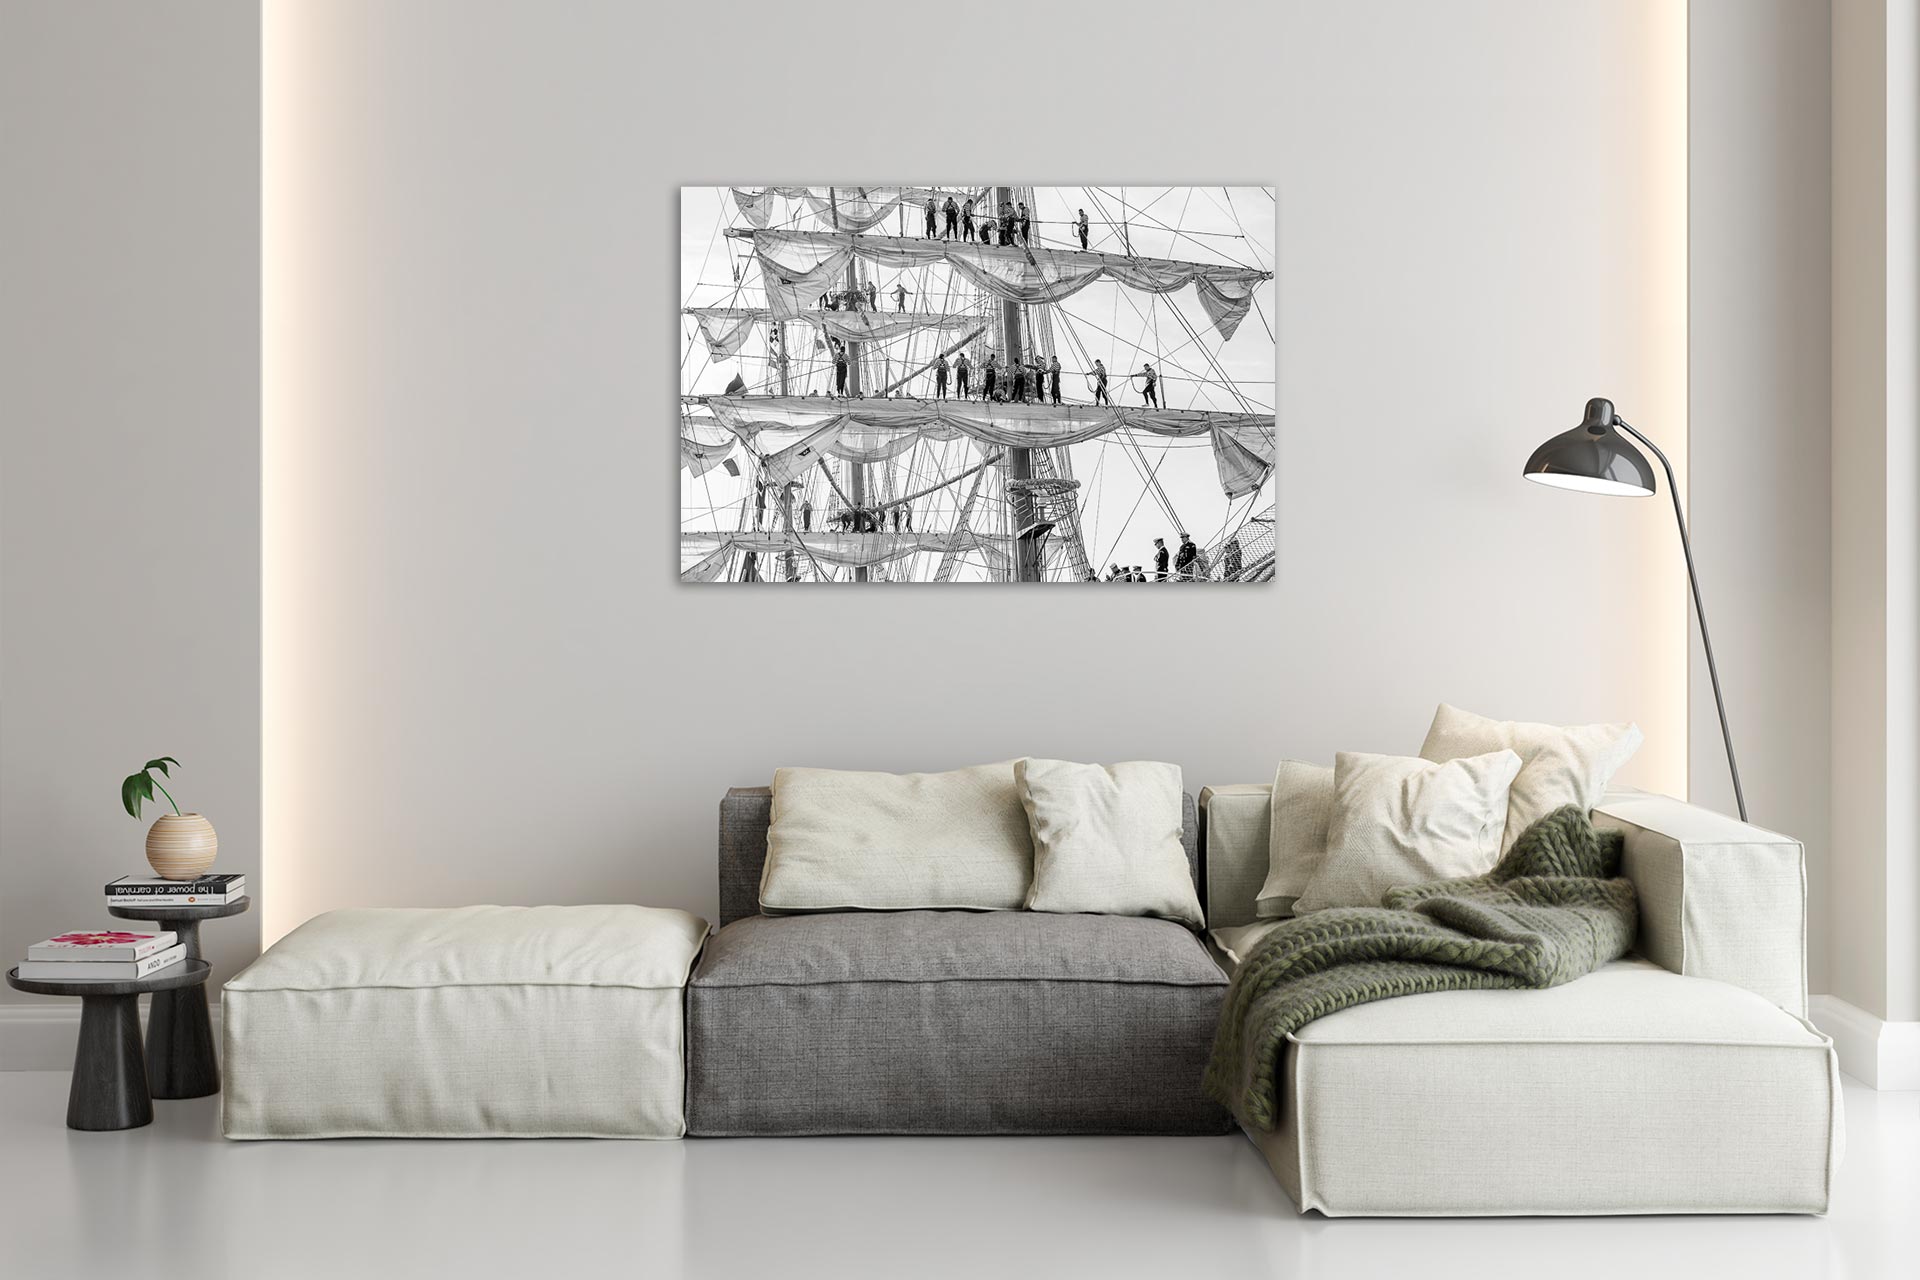 LSW106-matrosen-wandbild-auf-leinwand-acrylglas-aludibond-wohnzimmer